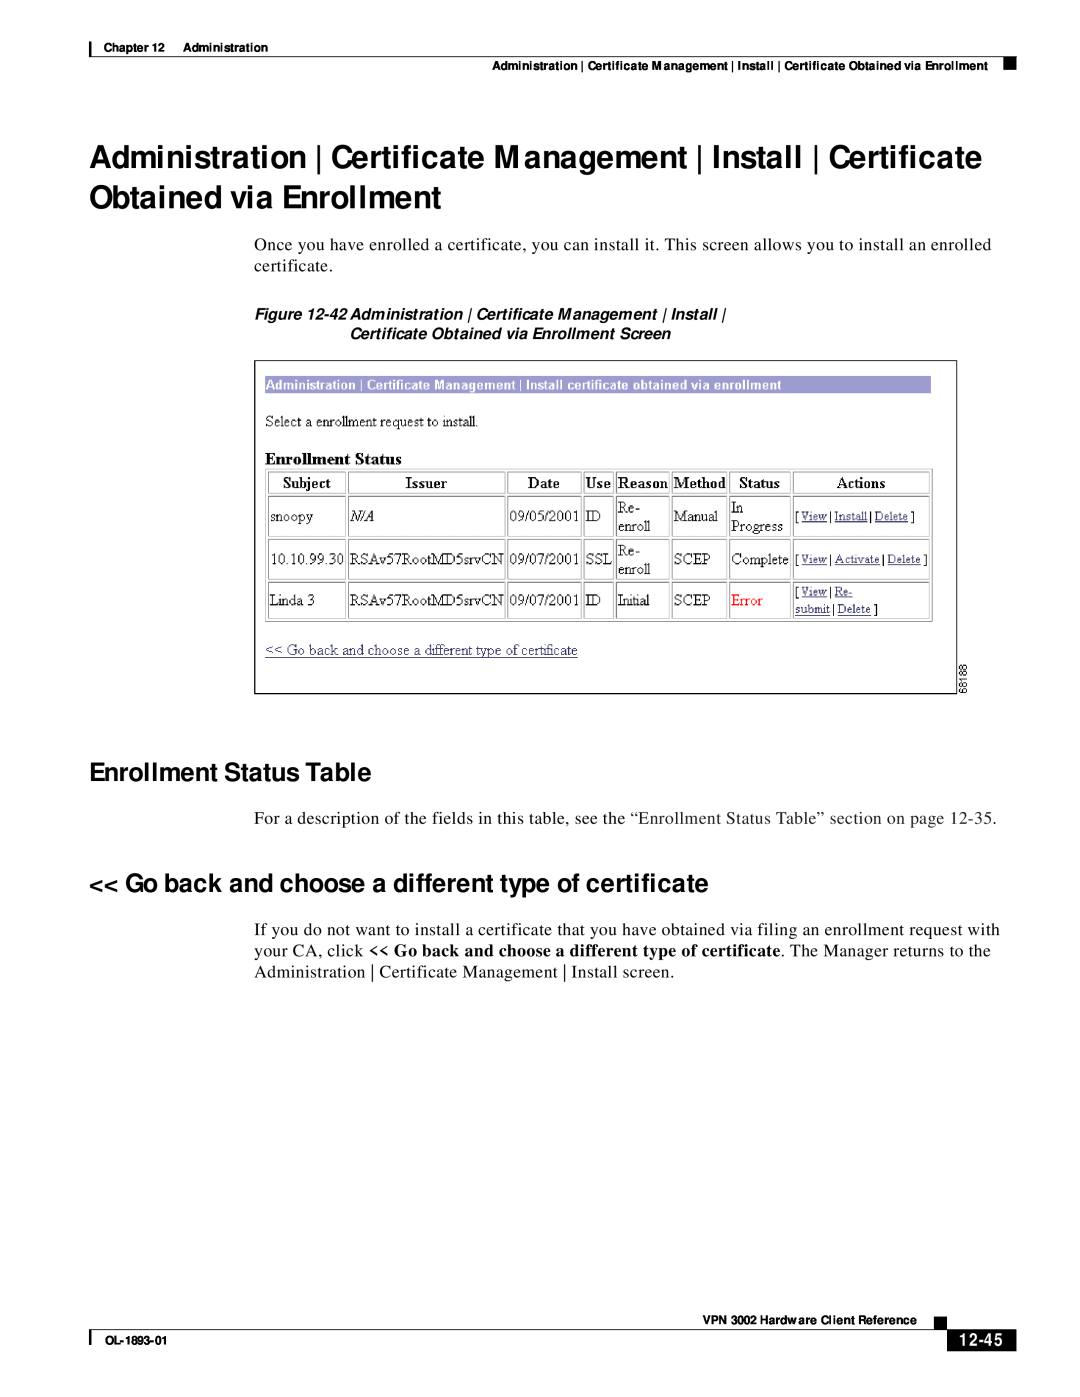 Cisco Systems VPN 3002 manual 12-45, Enrollment Status Table, Certificate Obtained via Enrollment Screen 